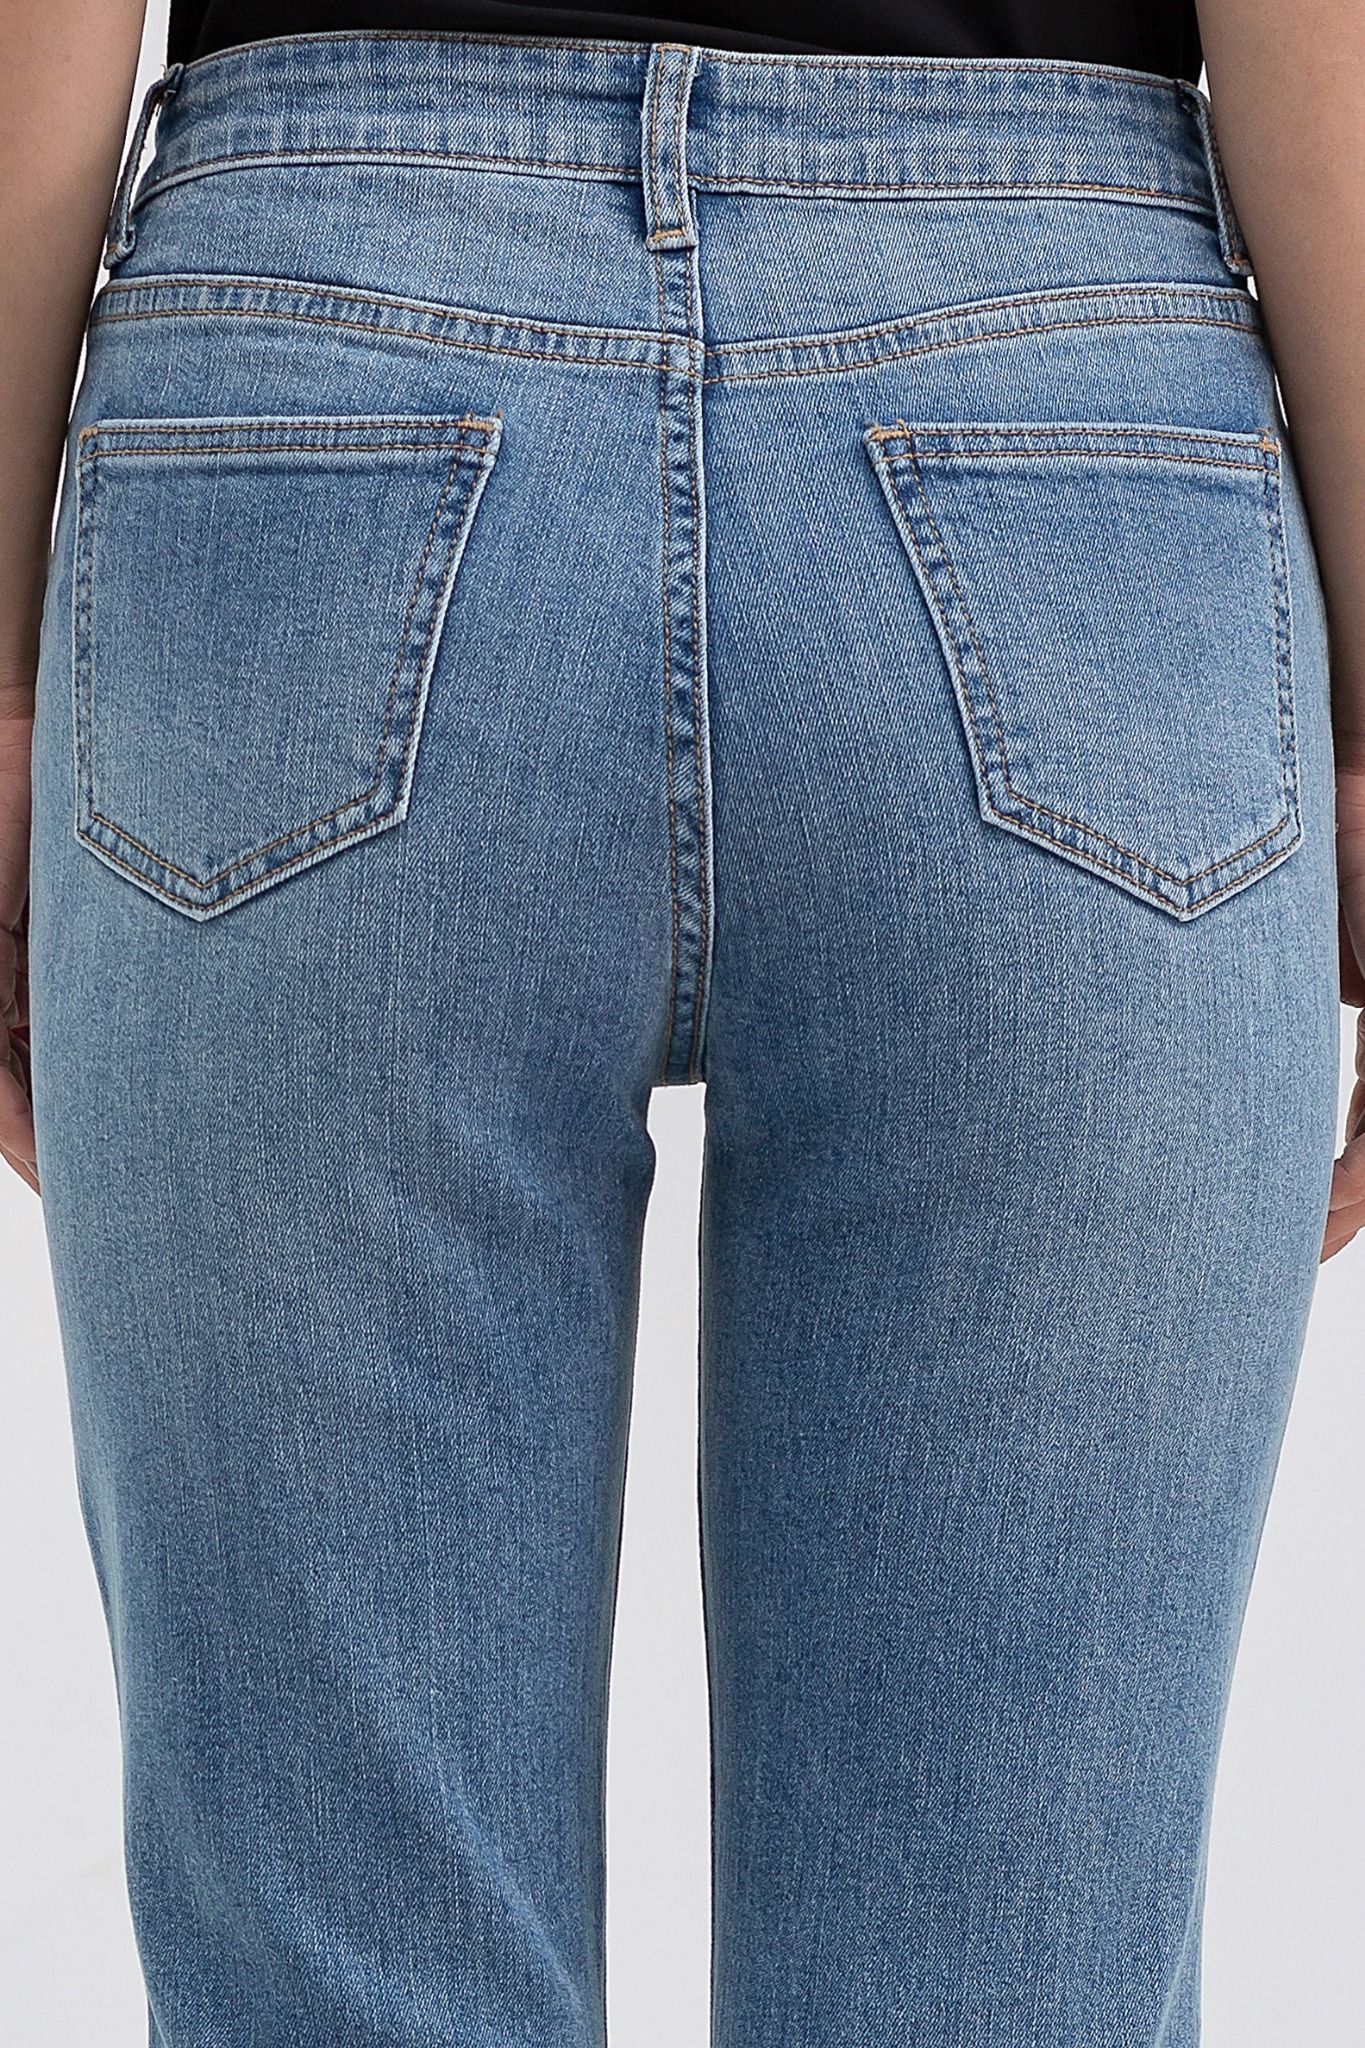  Quần jeans nữ ống loe phối màu lai FWJN22SS10L 